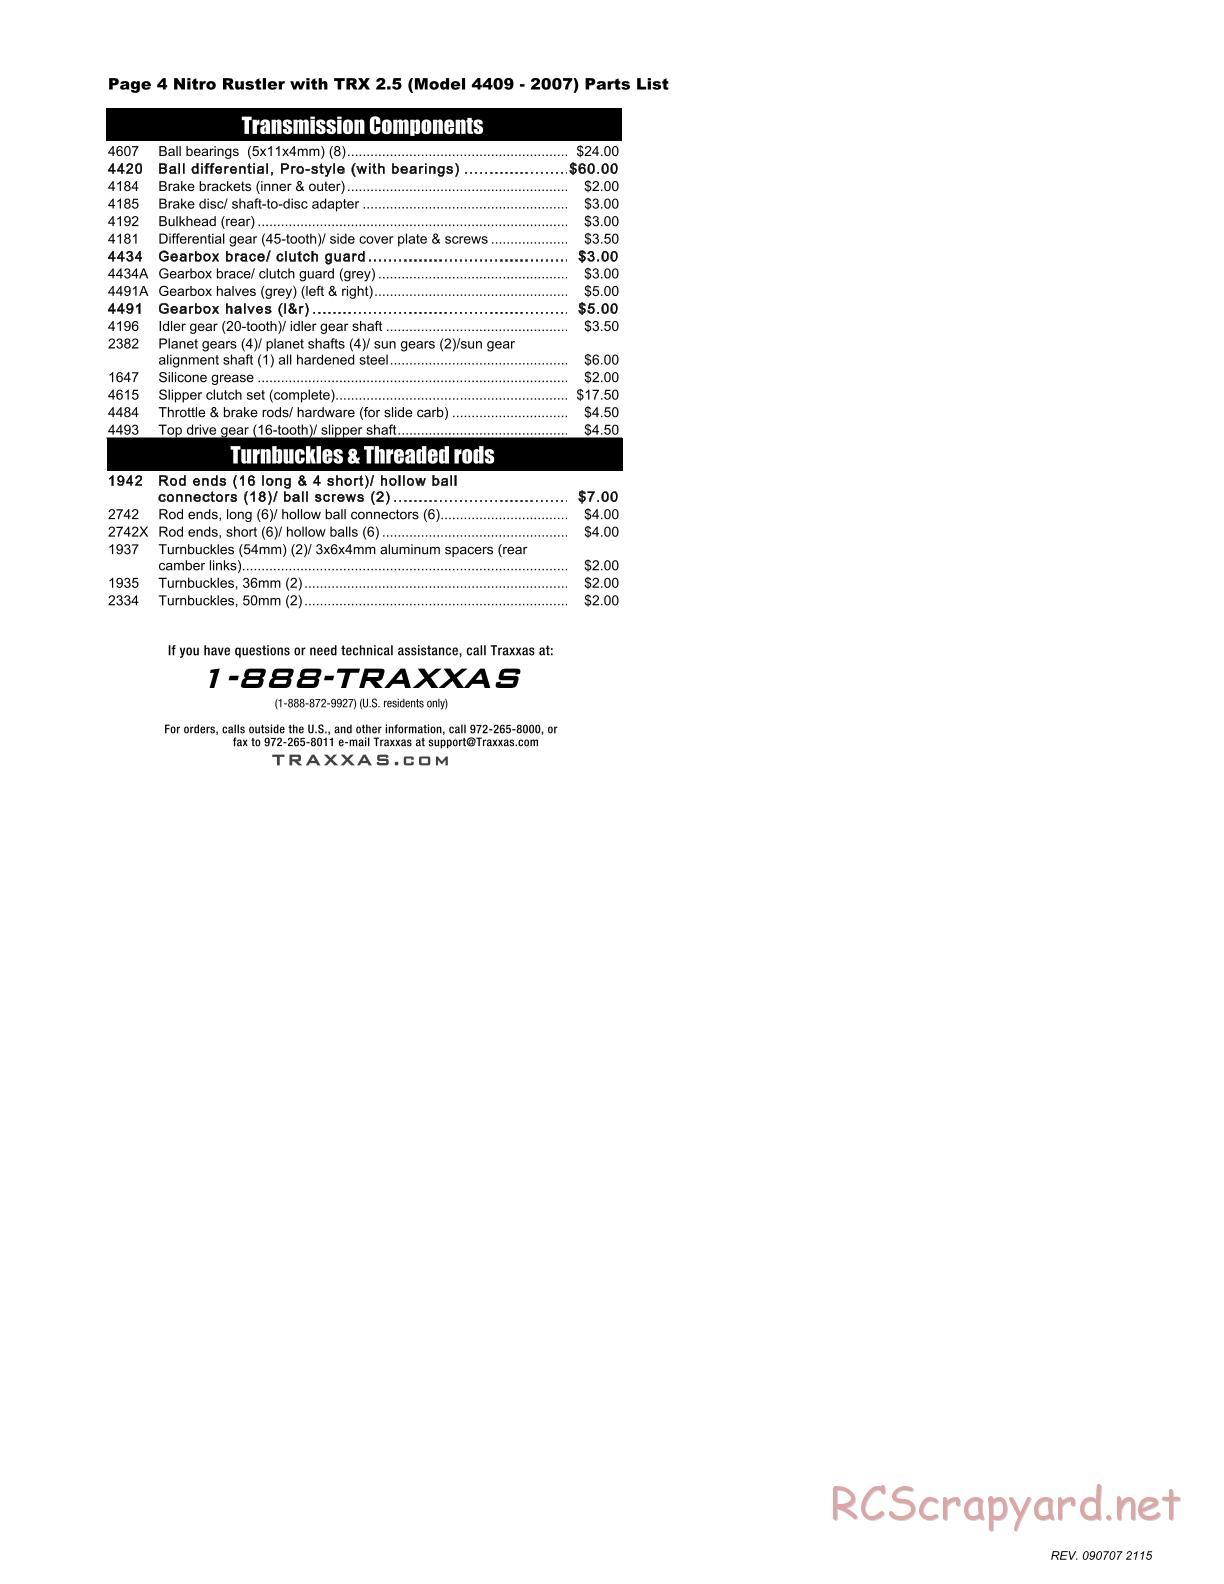 Traxxas - Nitro Rustler (2012) - Parts List - Page 4